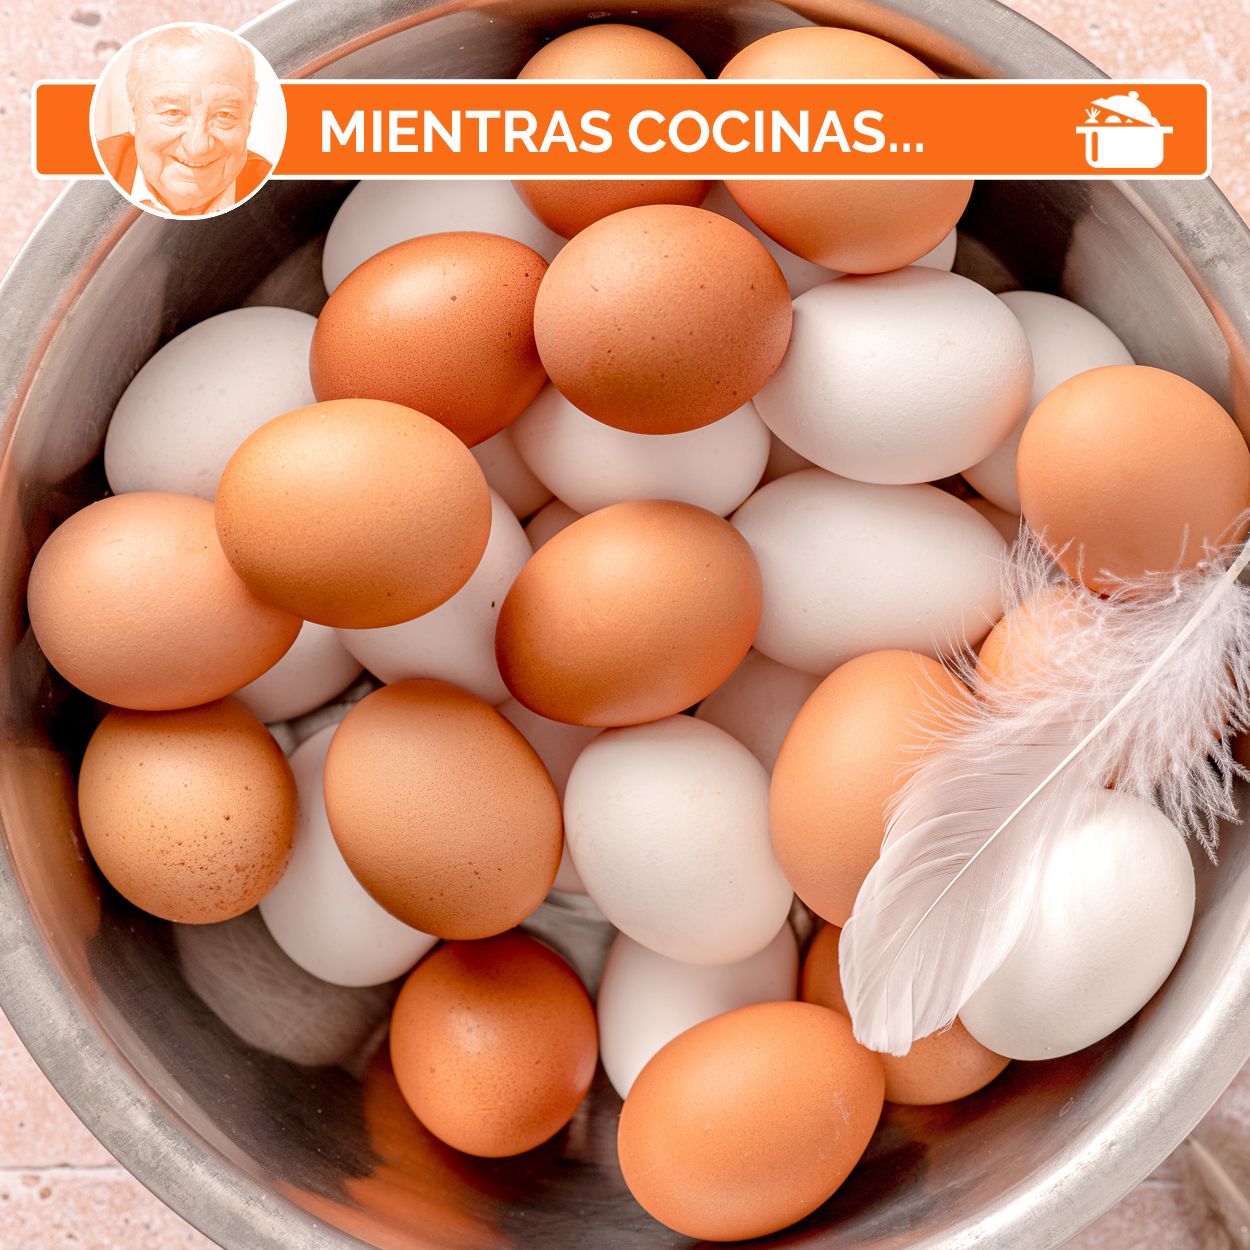 Huevos: ¿cómo saber si están frescos?